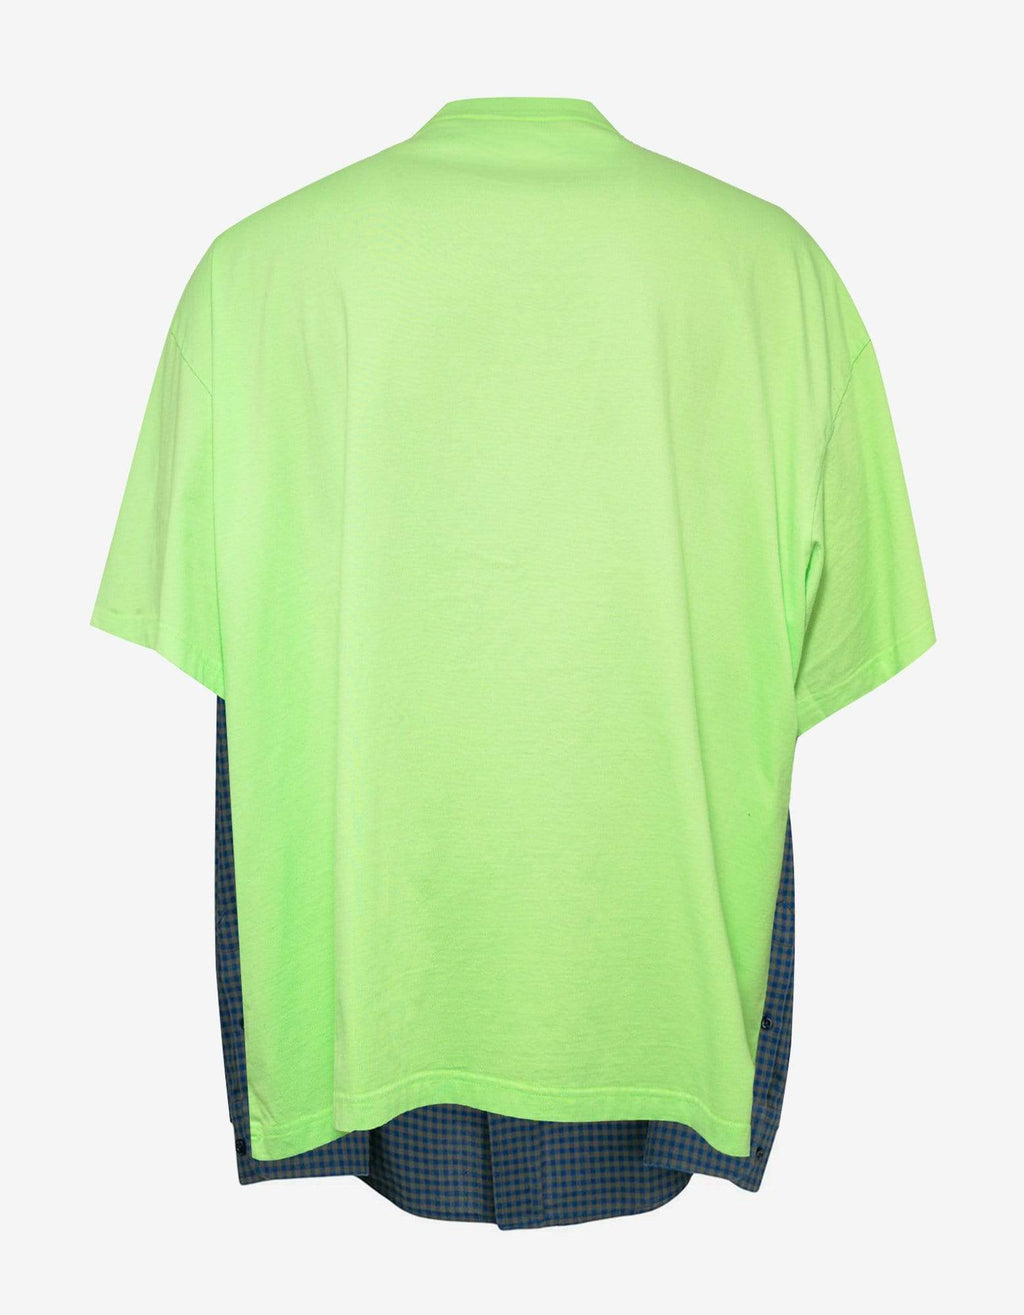 Balenciaga Green T-Shirt Shirt